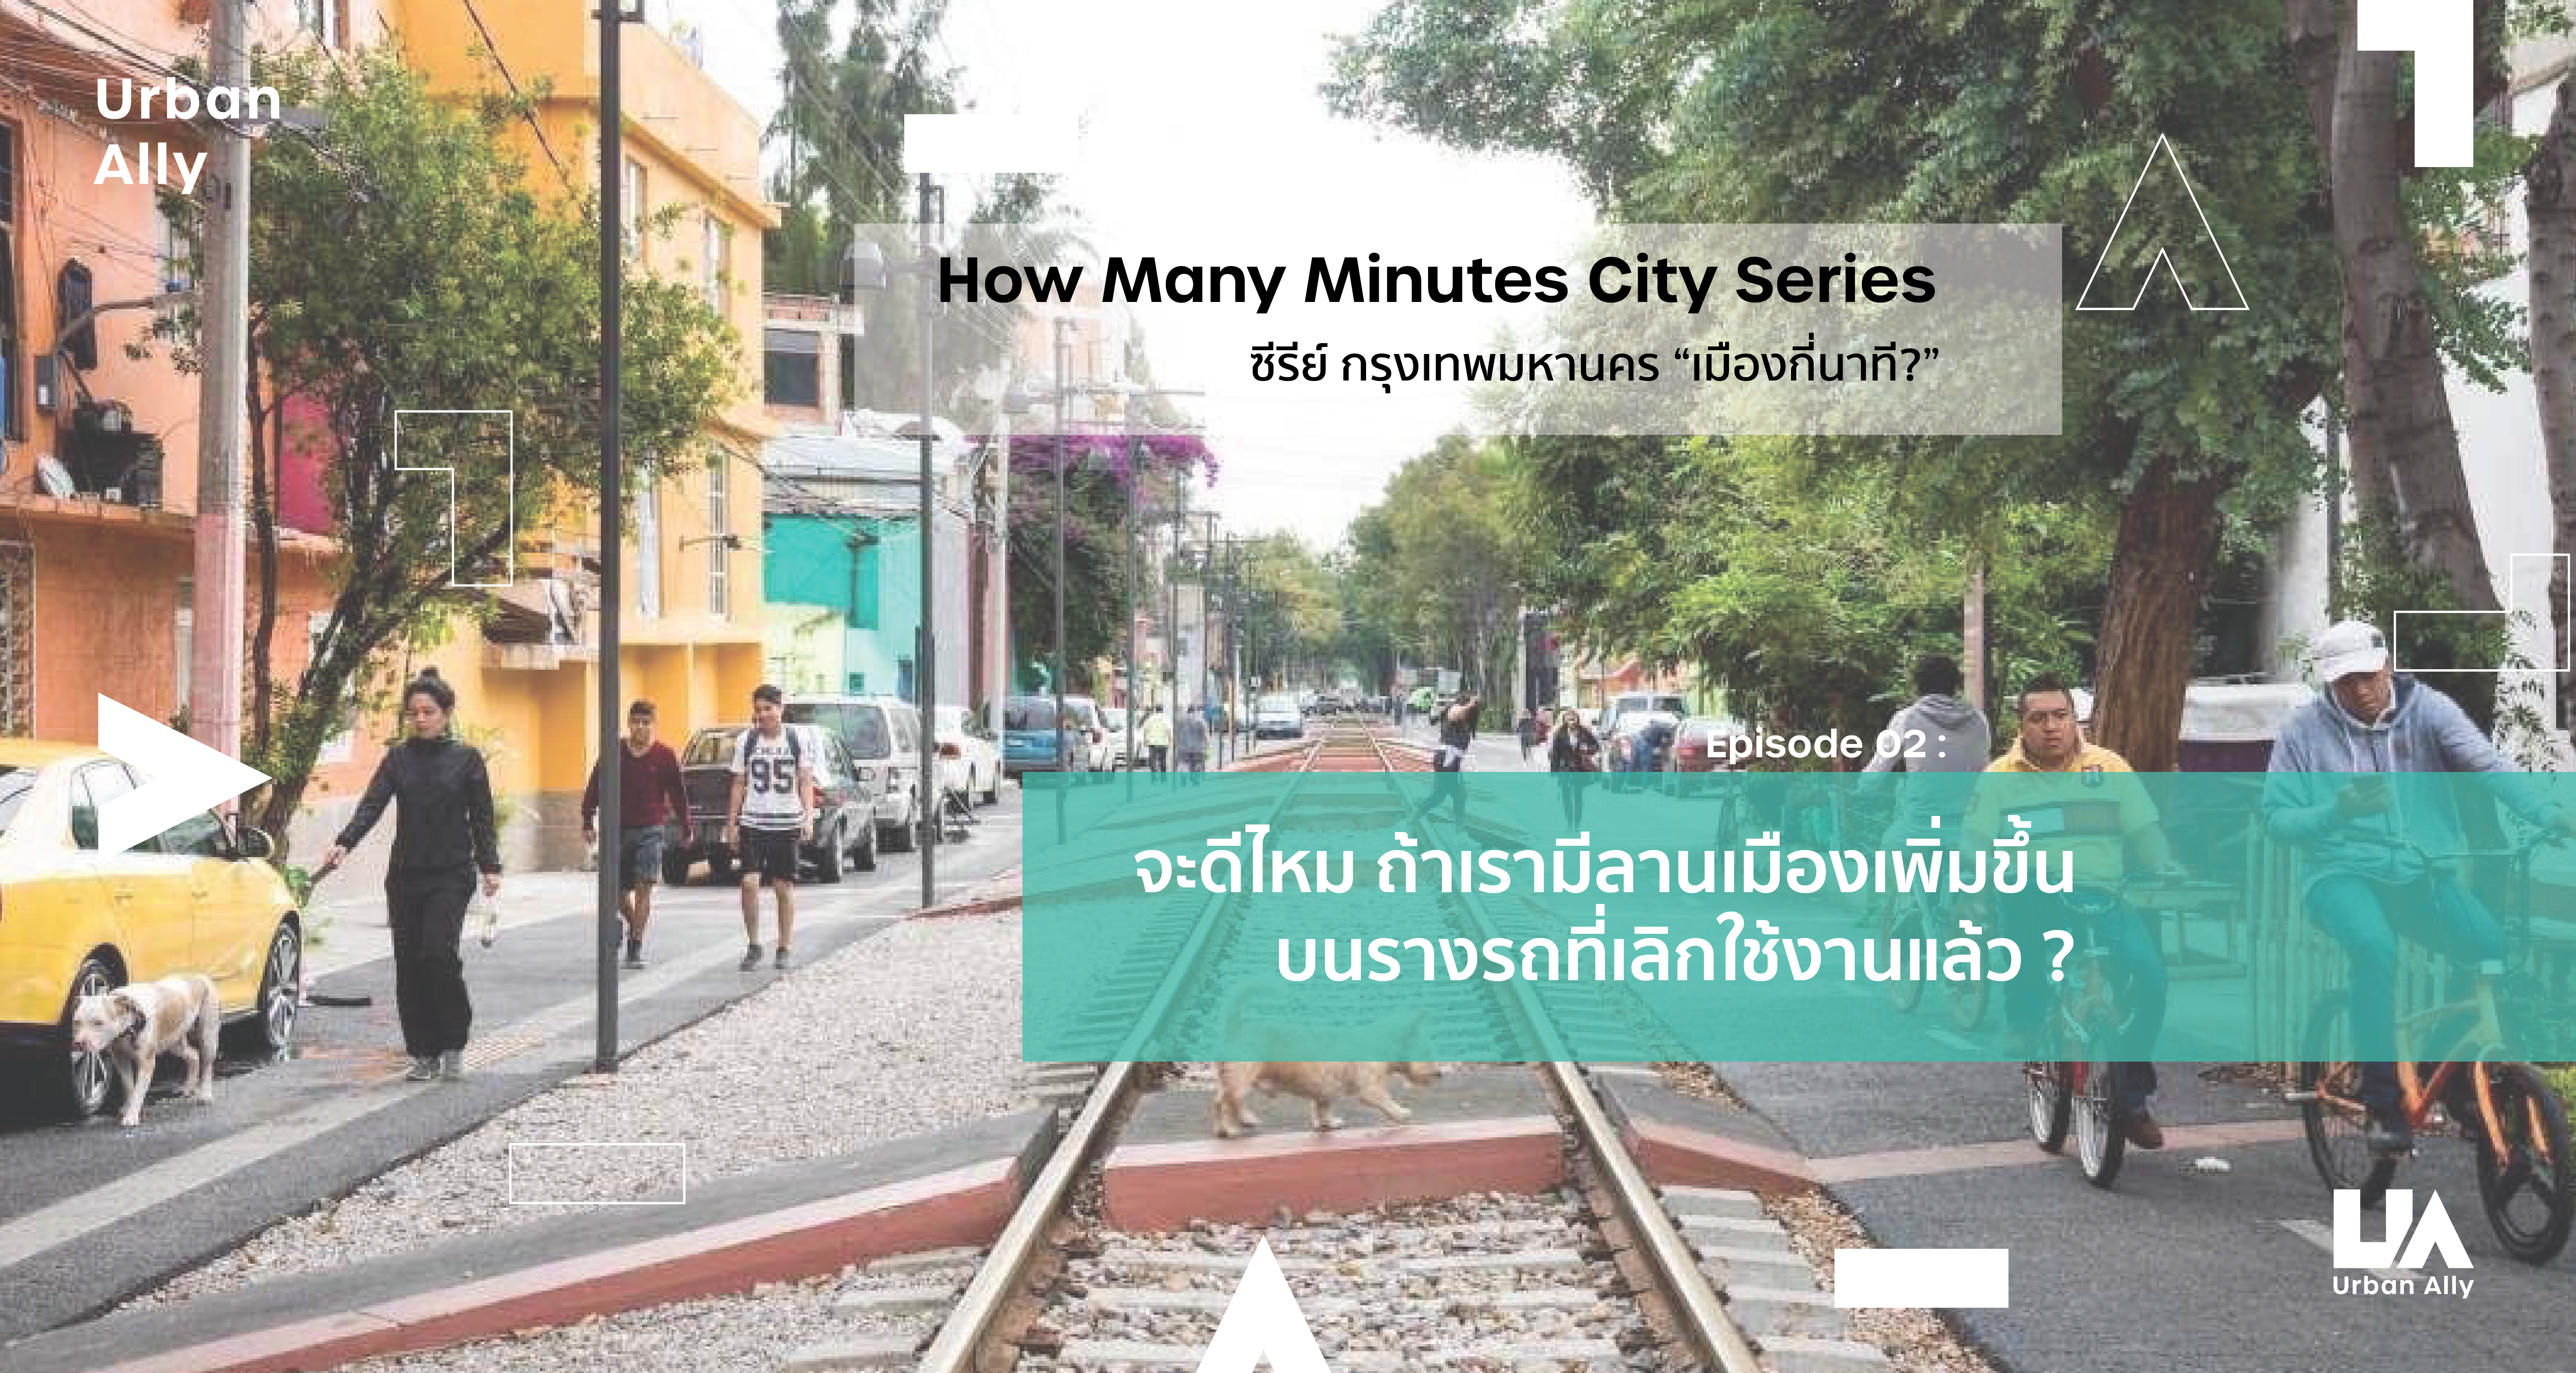 {"th-TH":"เปลี่ยน “รางรถ” เป็น “ลานเมือง” : How Many Minute City “เมืองกี่นาที” กับปฏิบัติการเติมเต็ม Bangkok Missing Link หัวลำโพง-บางซื่อ","en-US":"เปลี่ยน “รางรถ” เป็น “ลานเมือง” : How Many Minute City “เมืองกี่นาที” กับปฏิบัติการเติมเต็ม Bangkok Missing Link หัวลำโพง-บางซื่อ"}